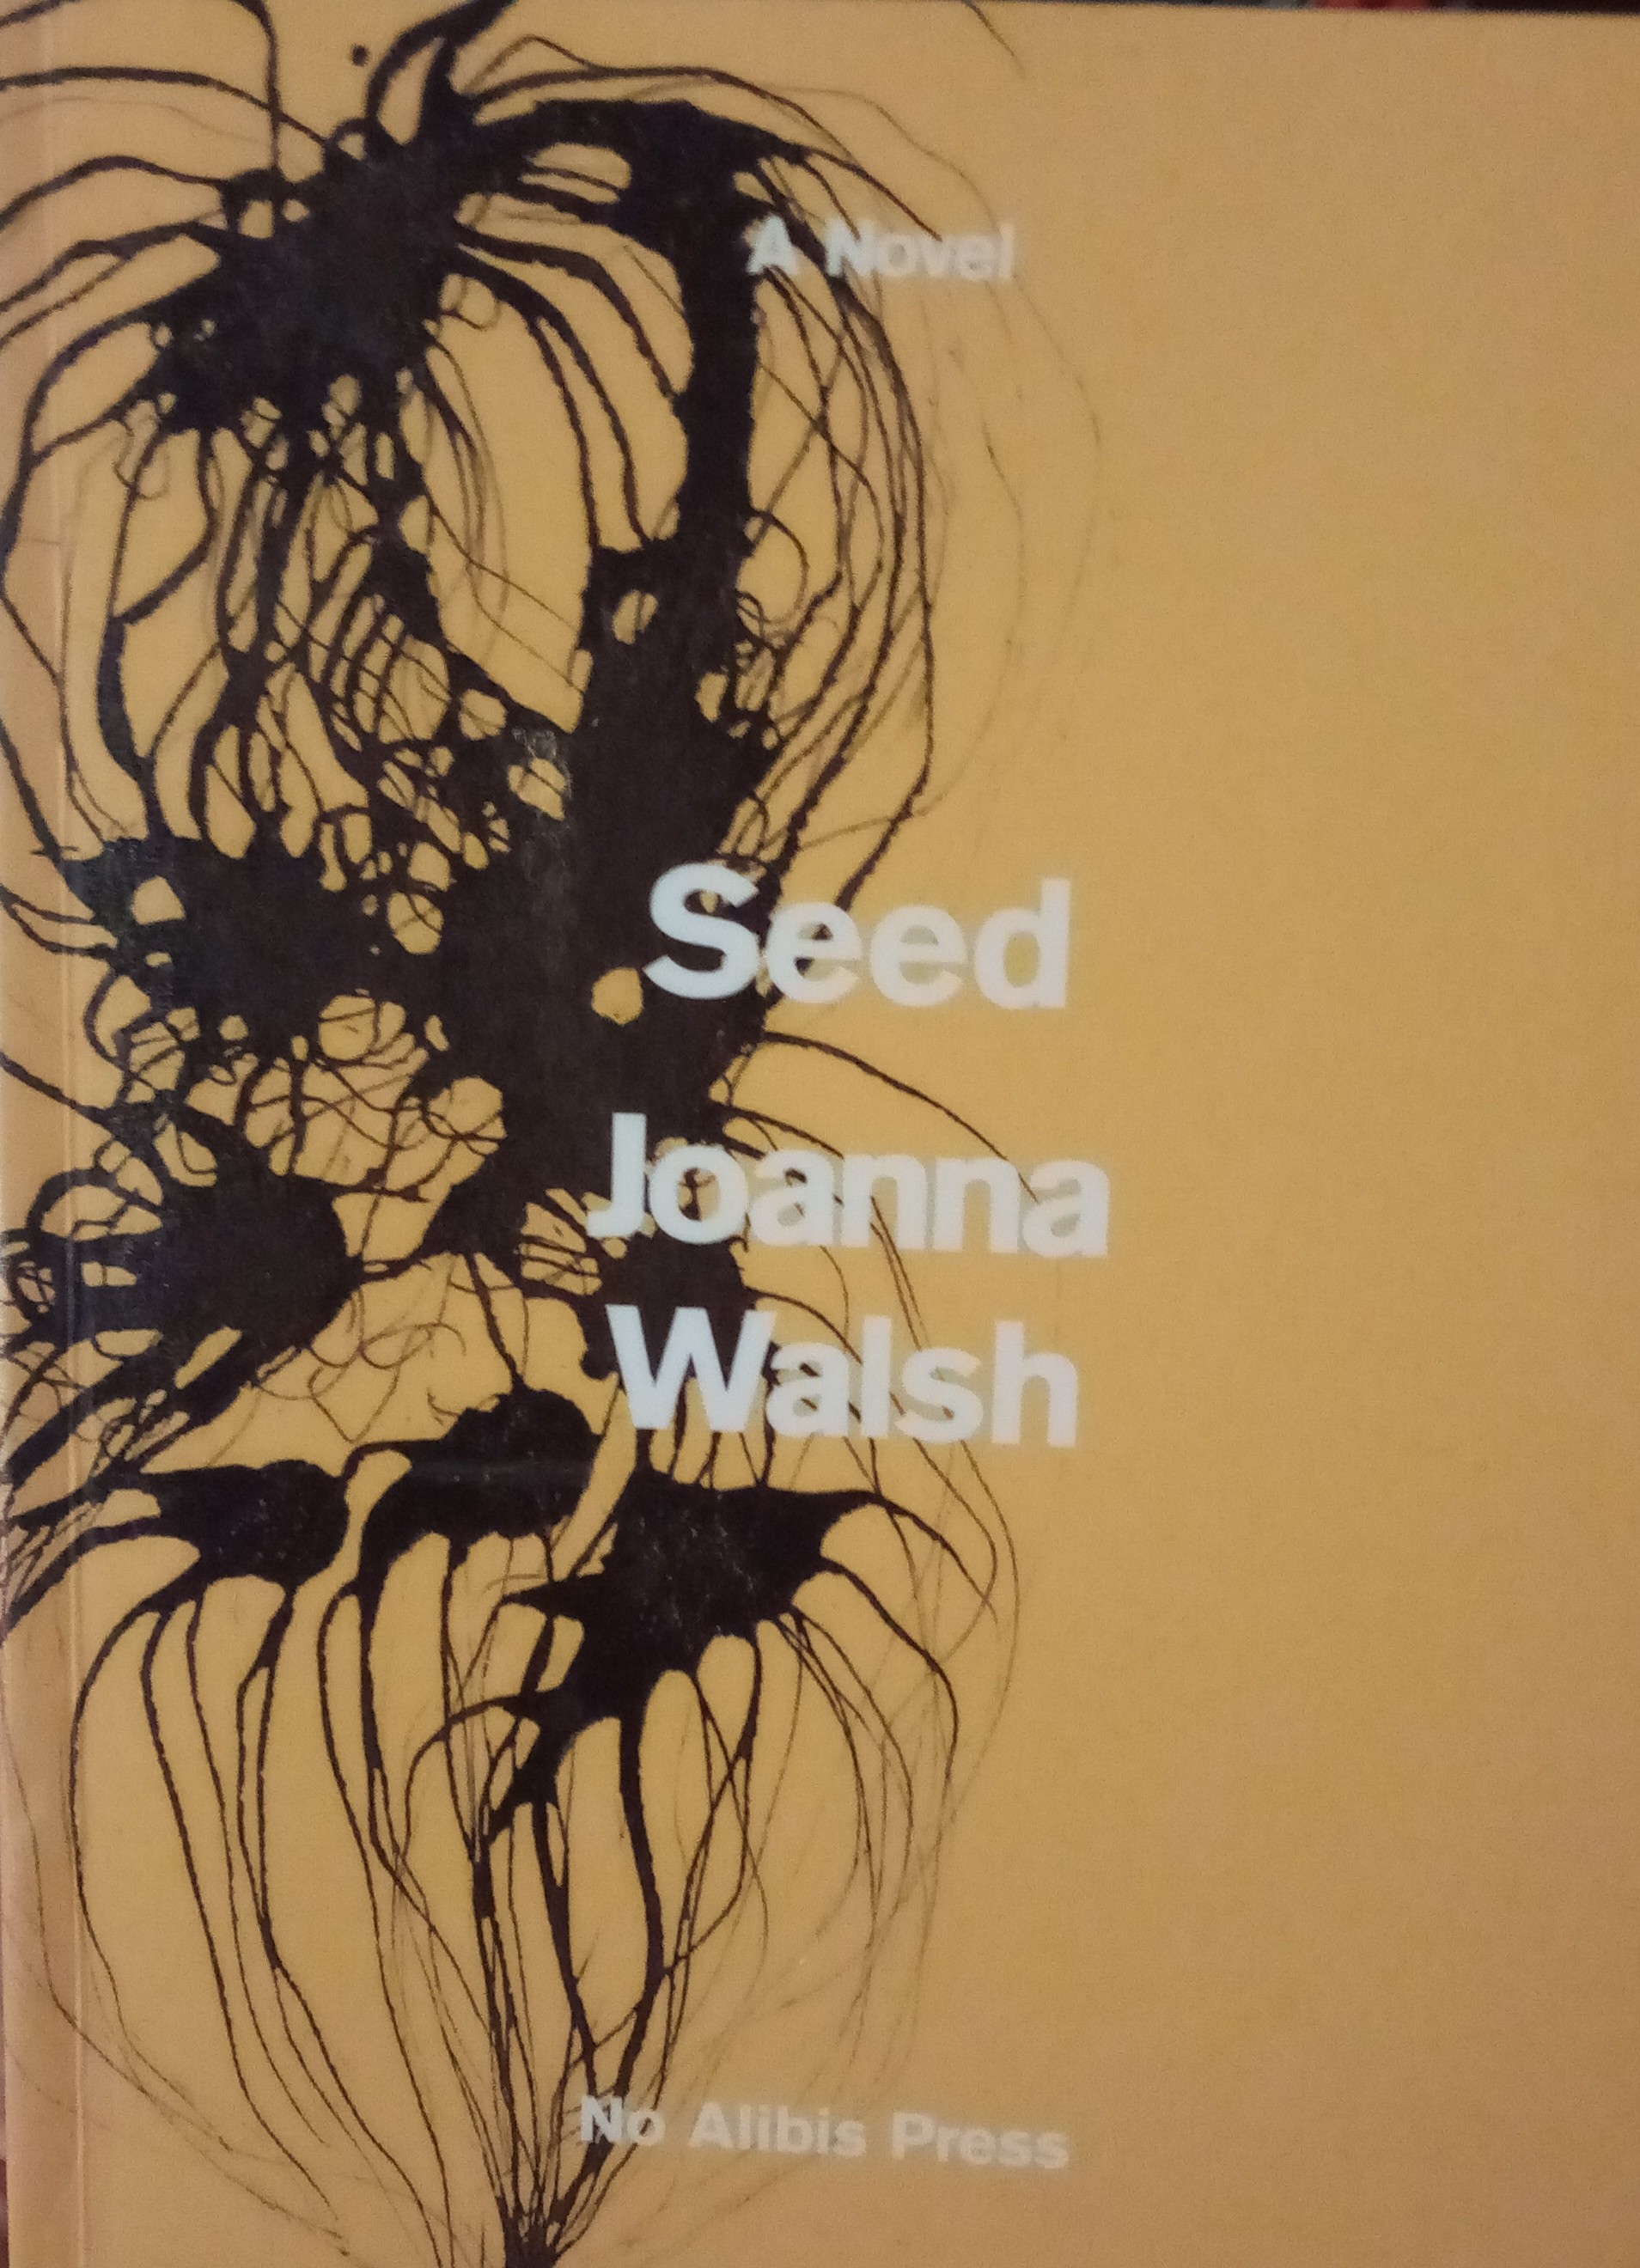 Seed (Paperback, 2021, No Alibis Press)